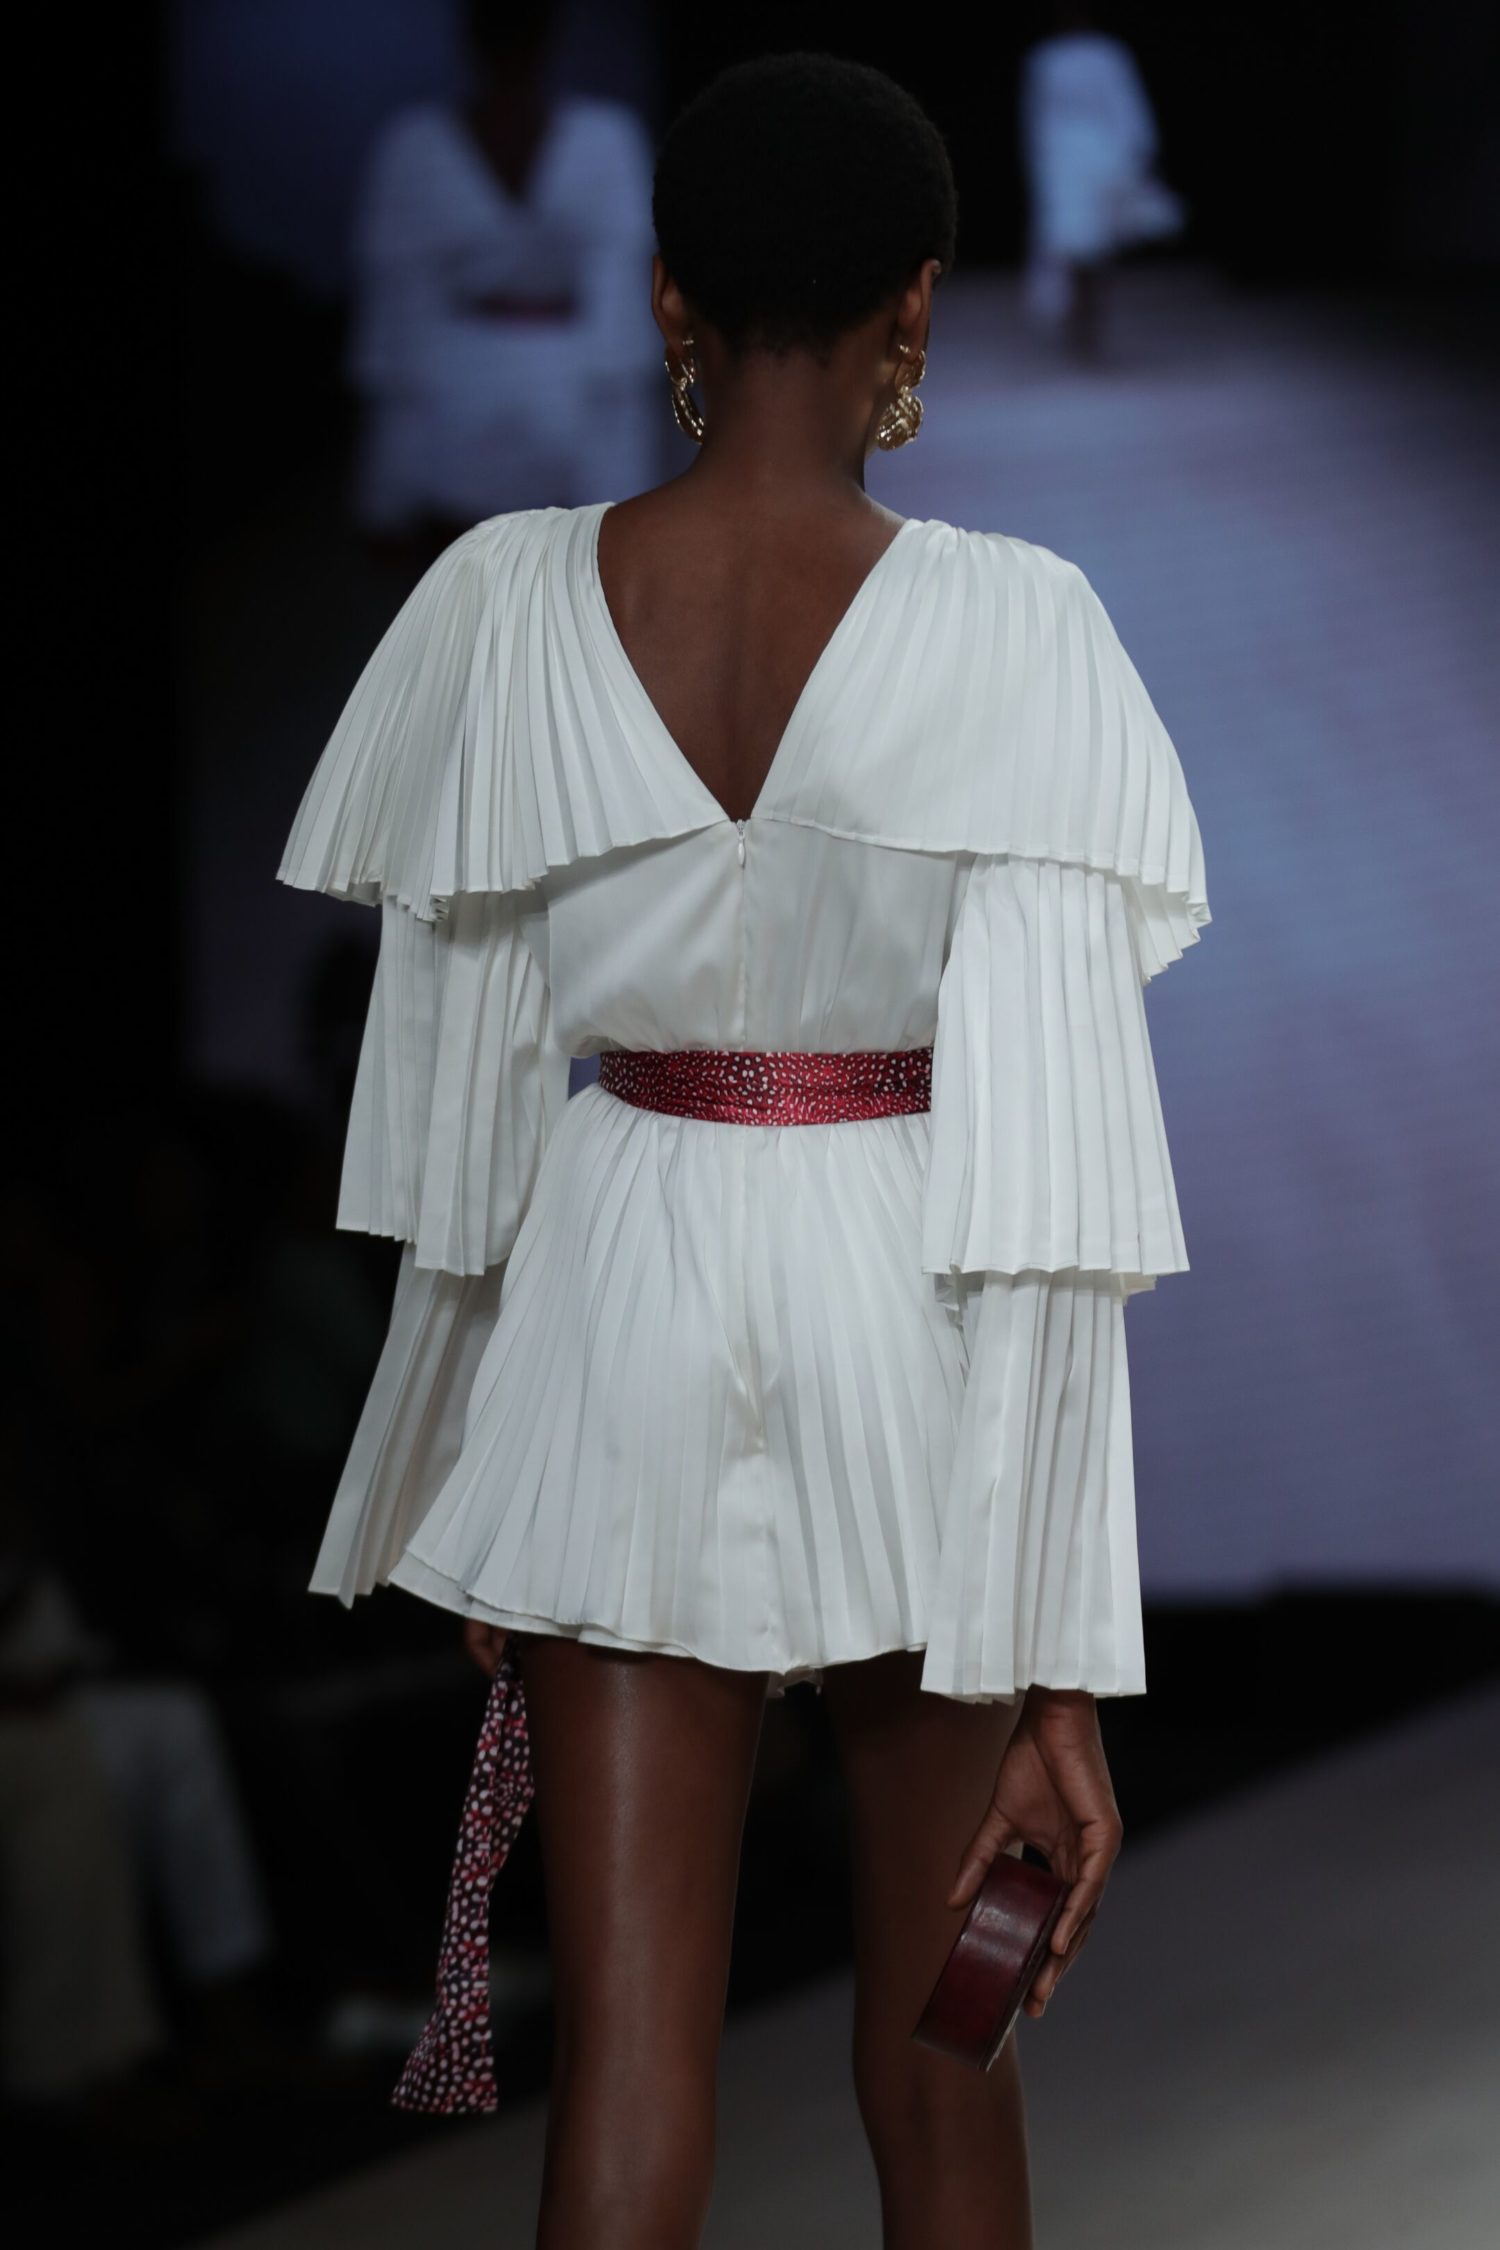 ARISE Fashion Week 2019 | Andrea Iyamah